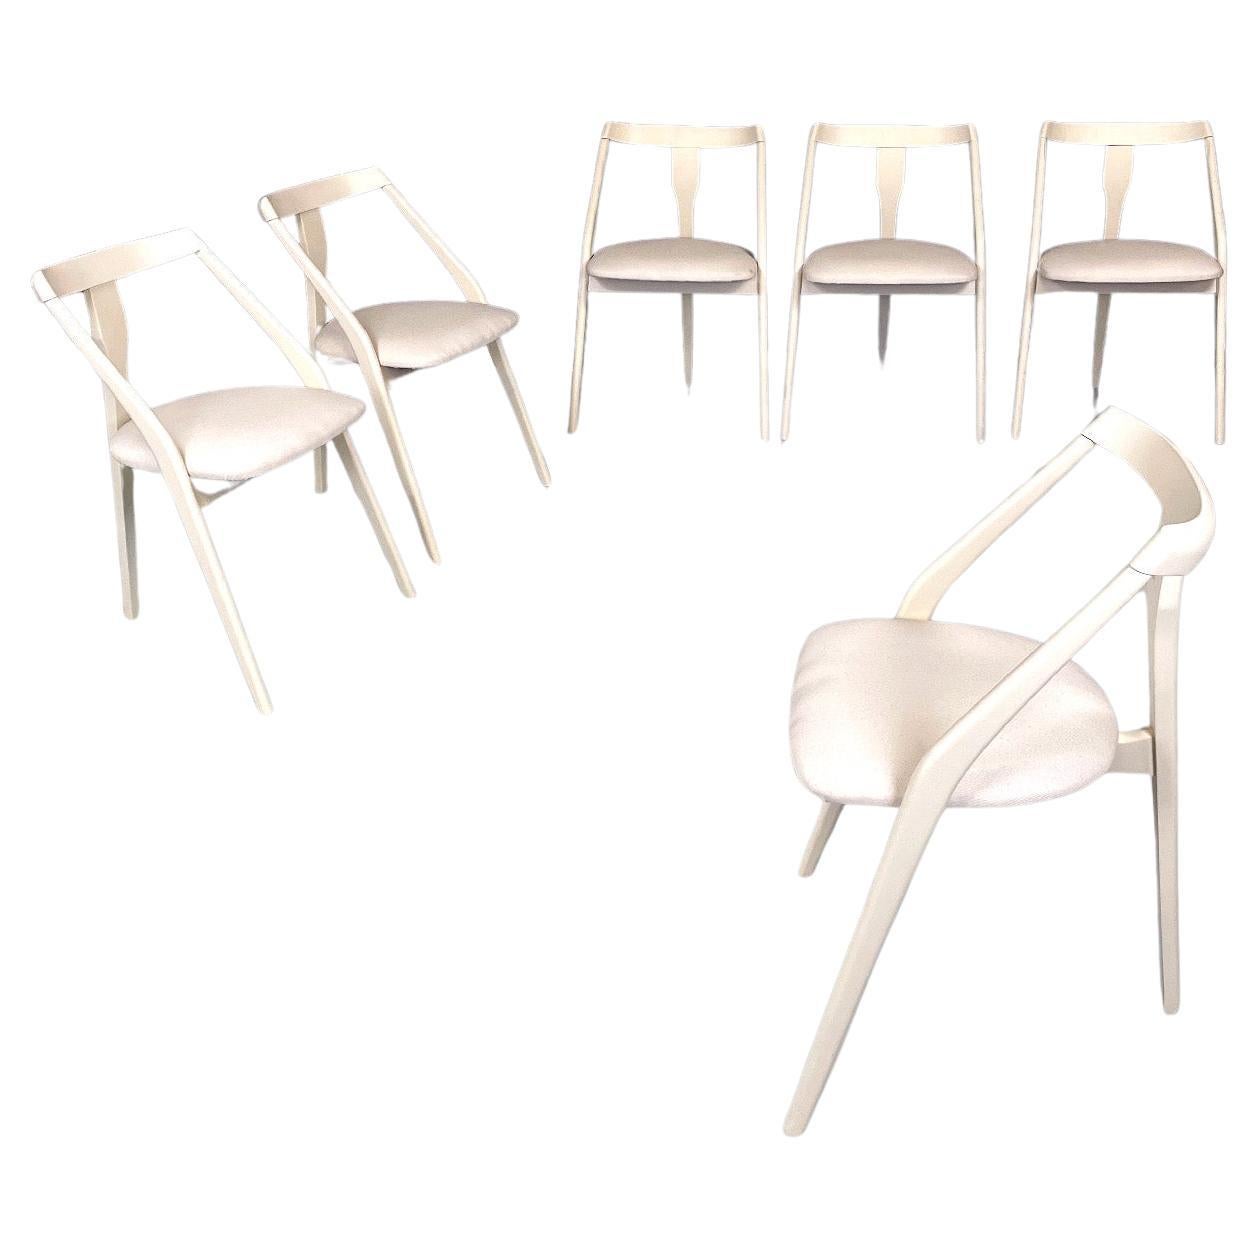 Italian mid-century modern white wood and fabric chairs, 1960s